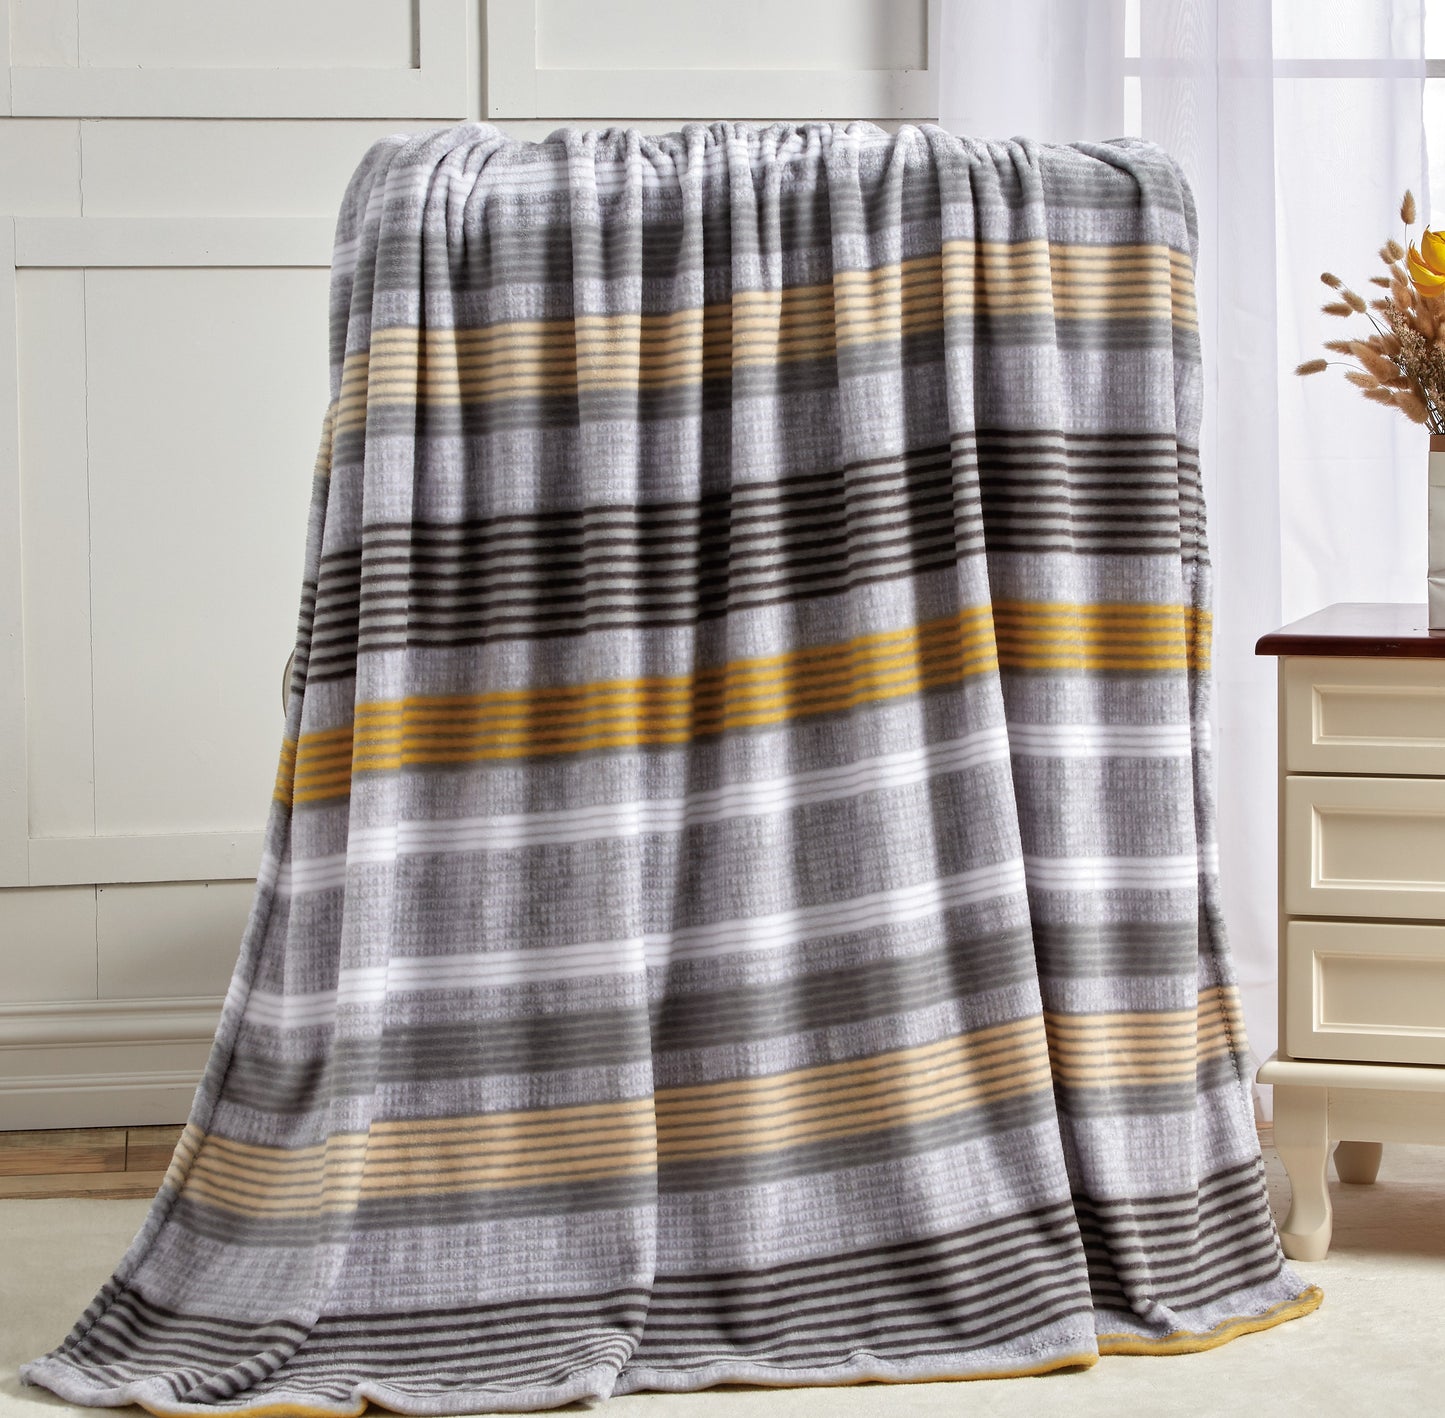 Elegant Comfort Ultra Soft Lightweight Printed Throw Blanket - 50 x 60 inches